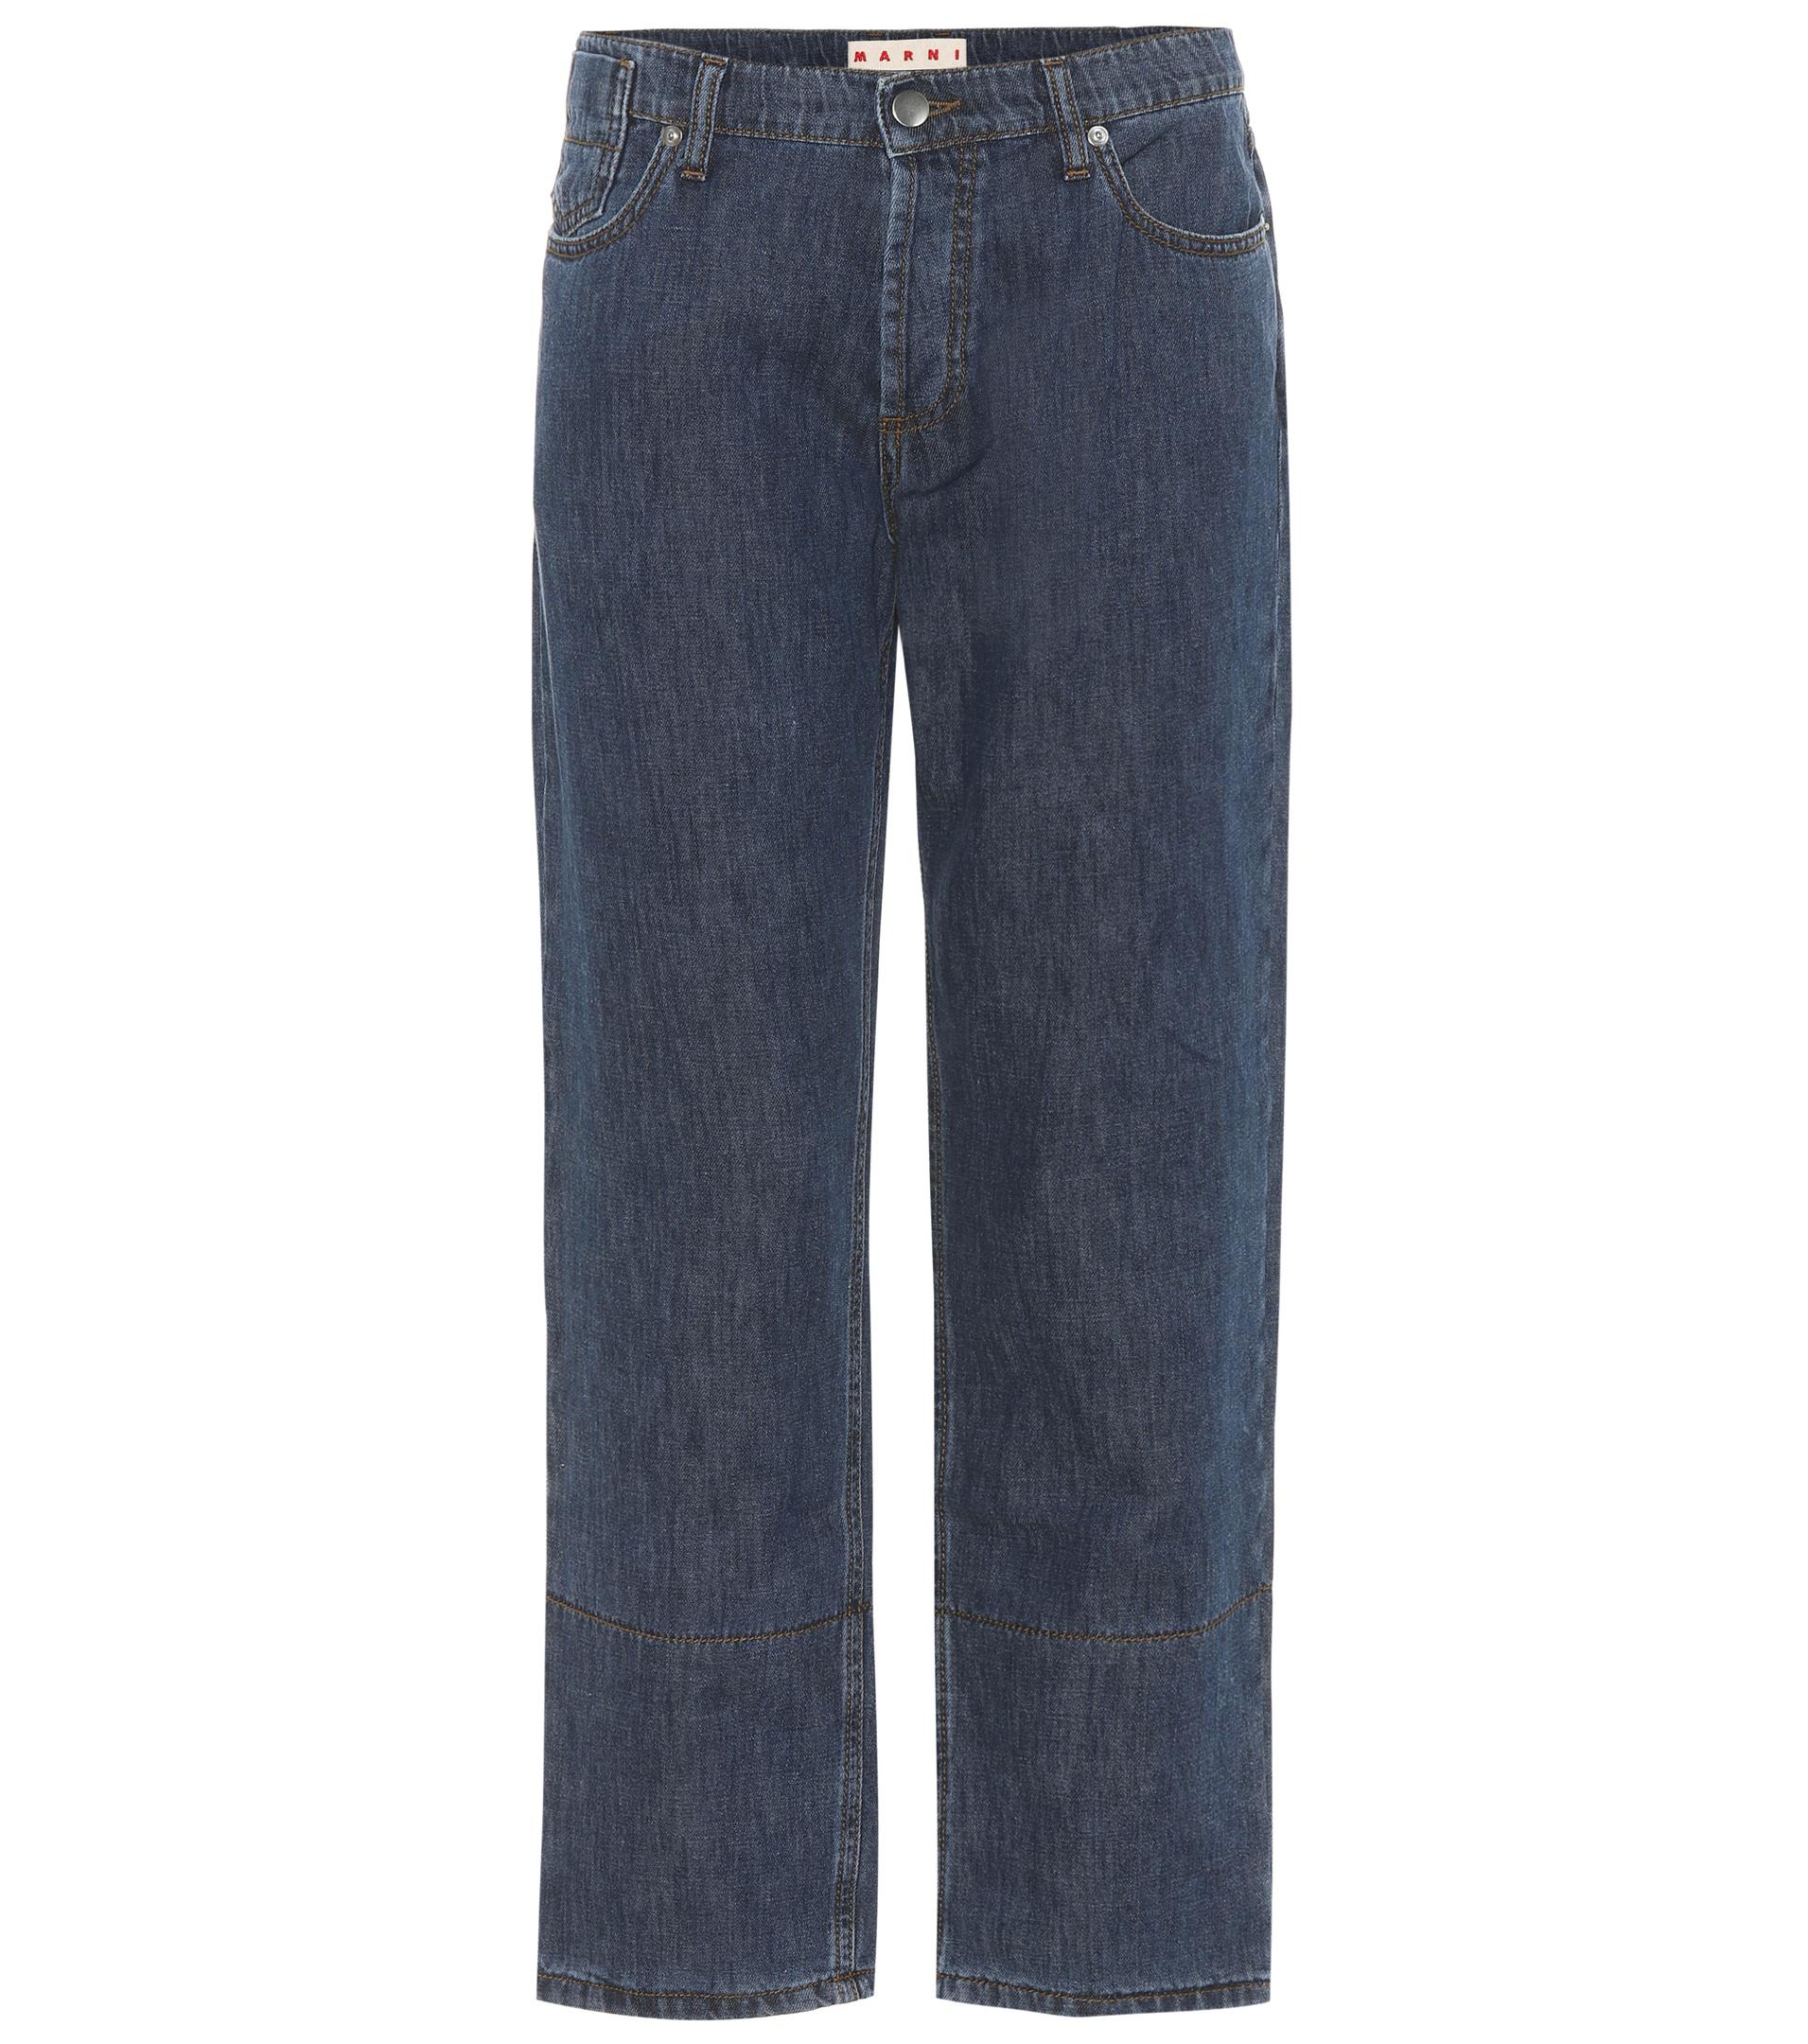 Marni Denim Cuffed Cotton And Linen Jeans in Cornflower (Blue) - Lyst